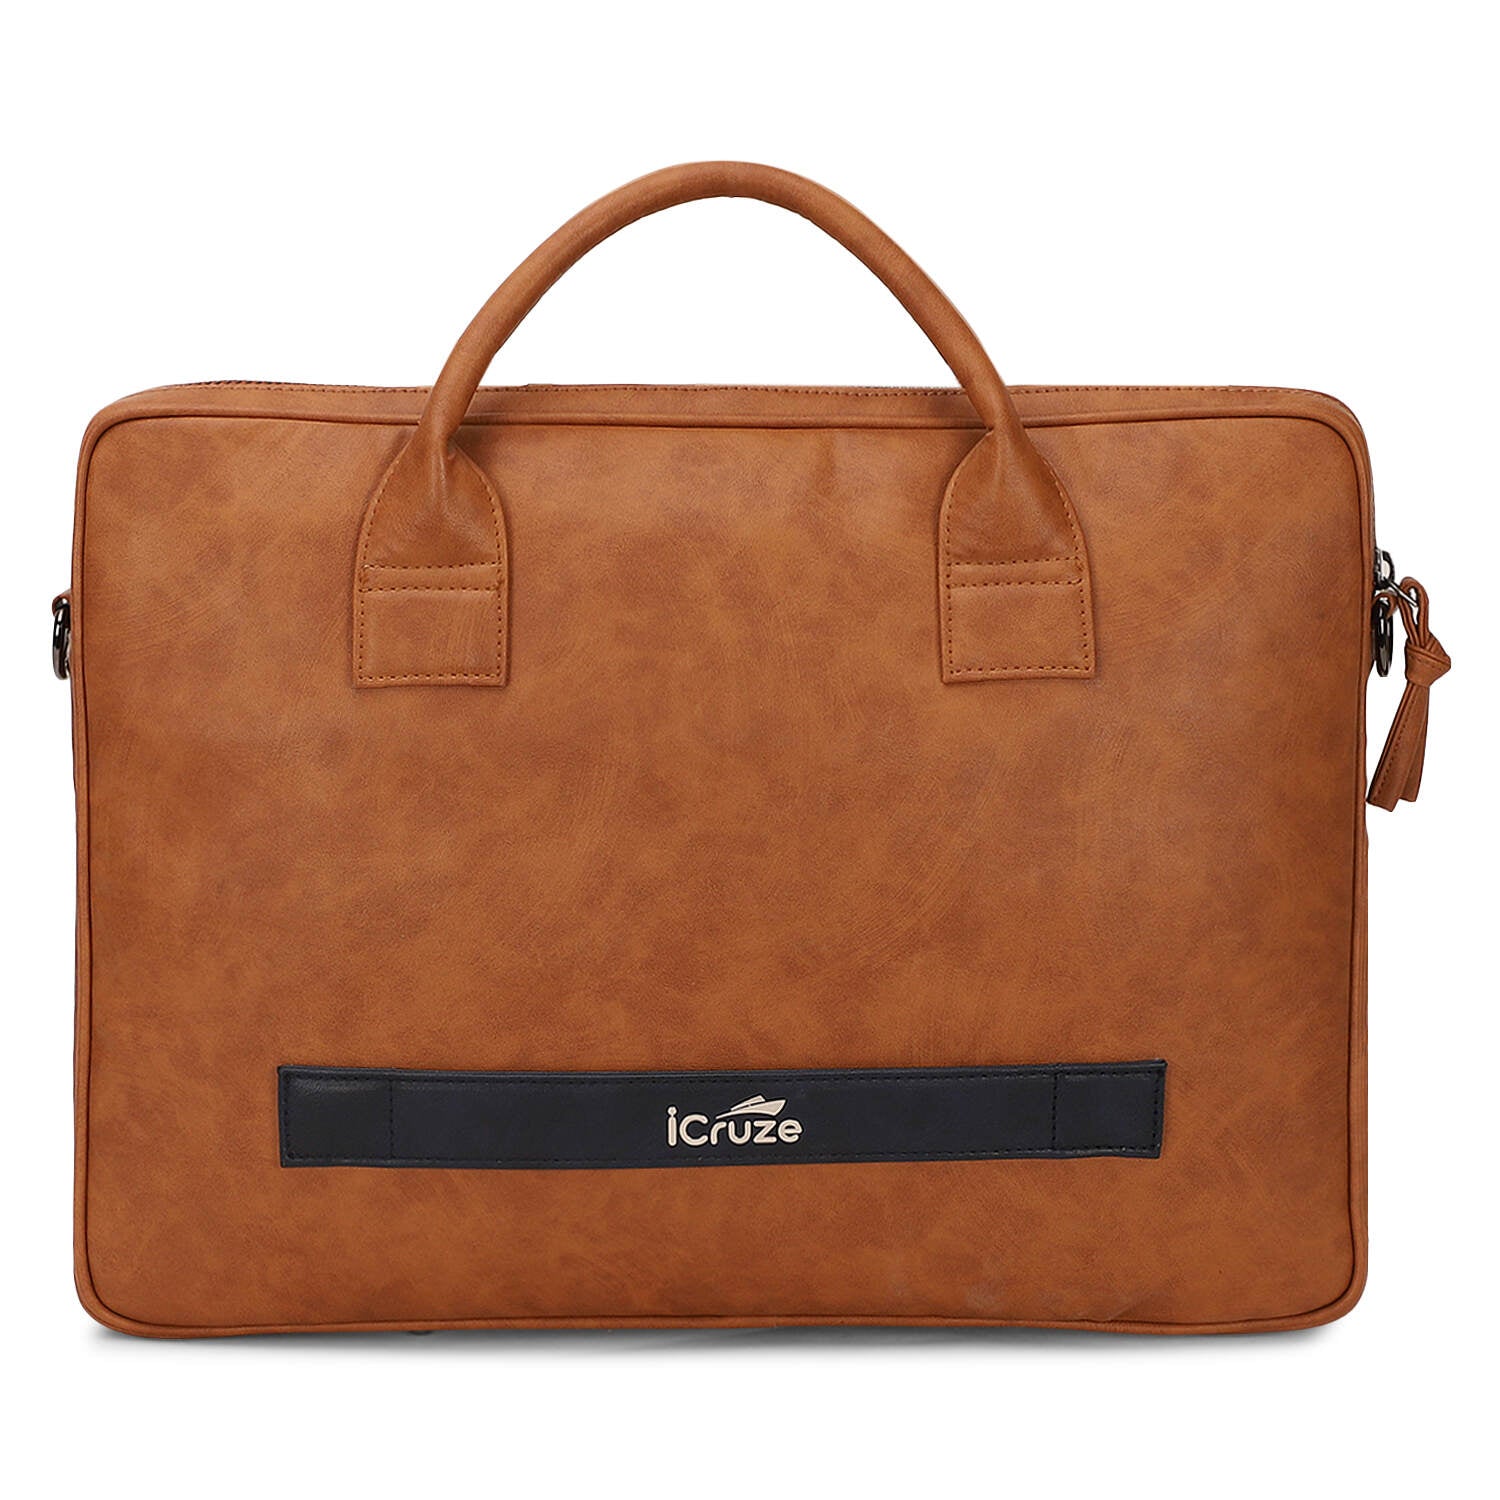 iCruze Elite Slim 15 inch Messenger Bag Tan - iCruze